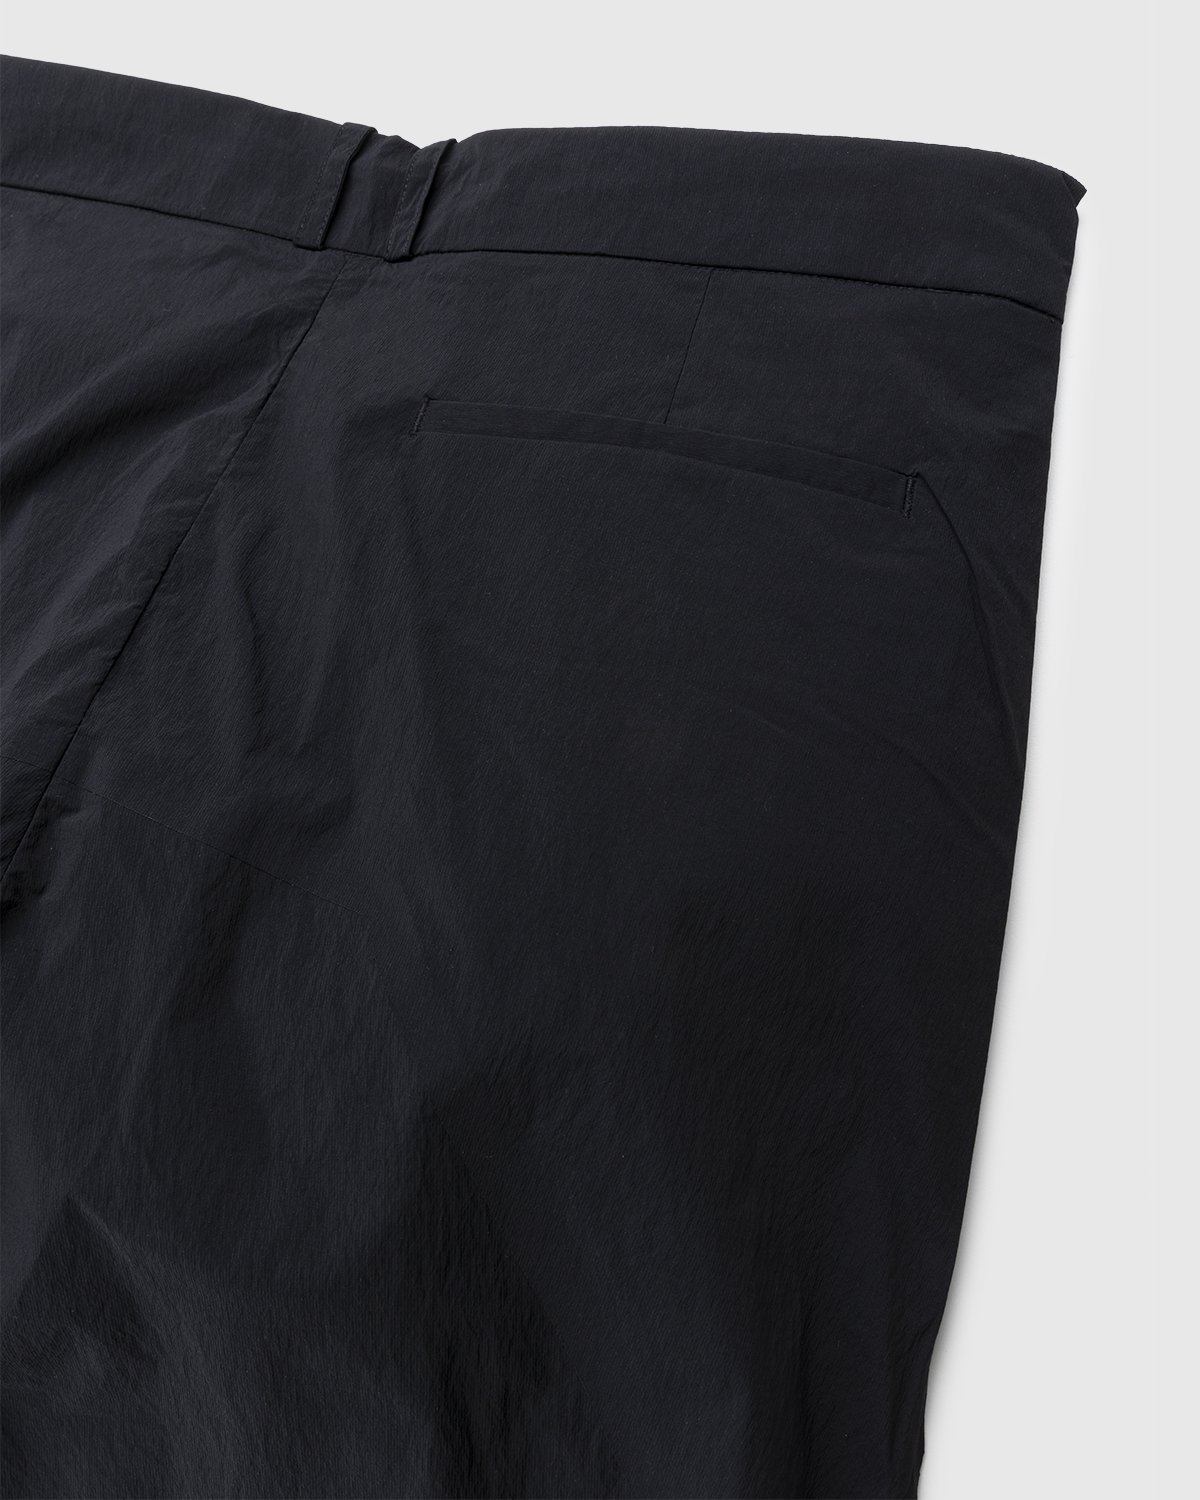 A-Cold-Wall* - Stealth Nylon Pants Black - Clothing - Black - Image 3